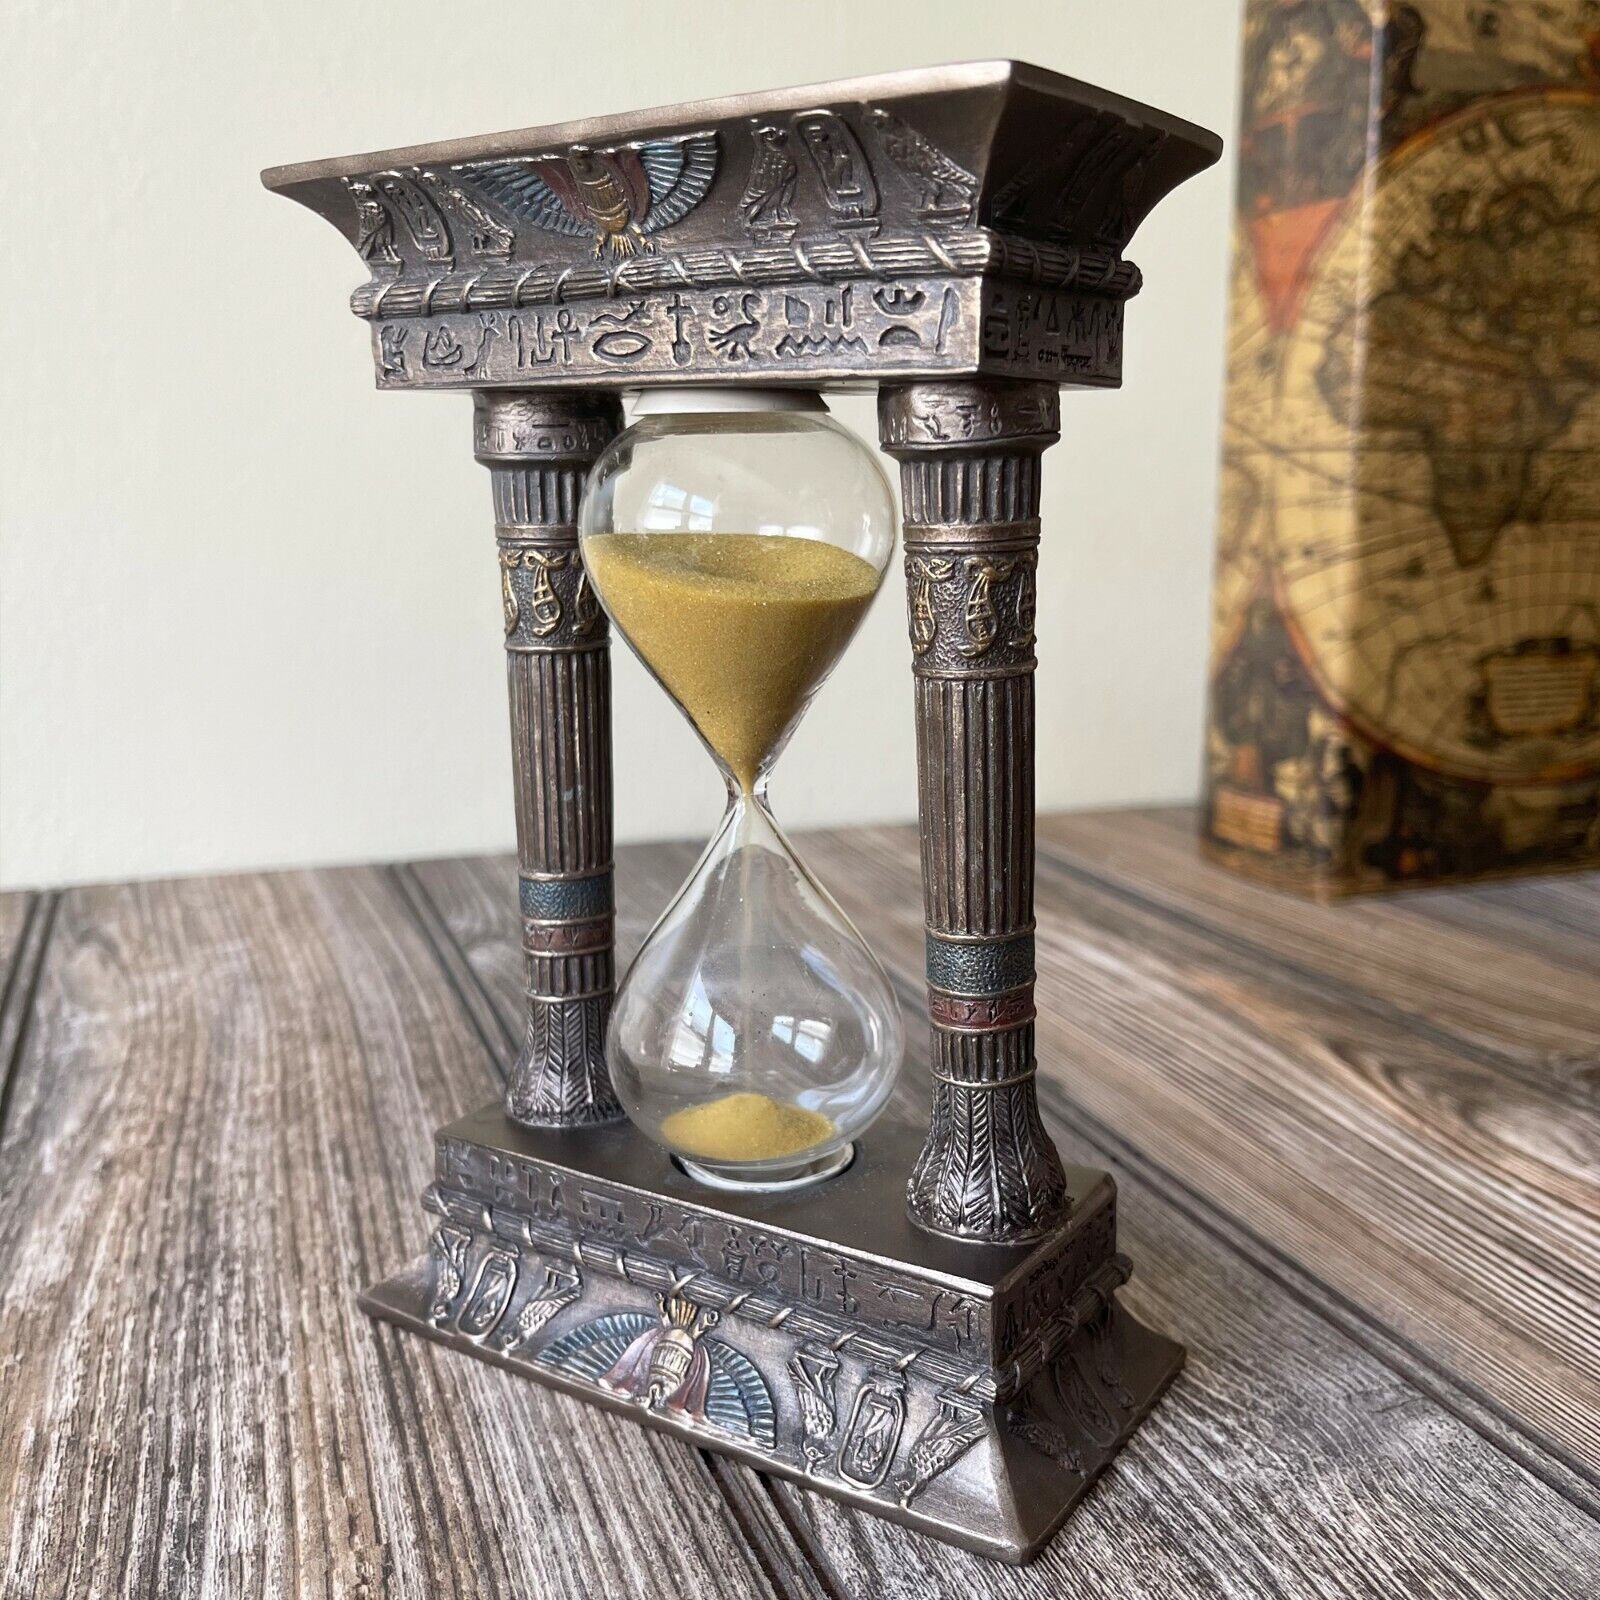 Handmade Egyptian Gateway Gold Cold Cast Bronze Sand Hourglass Timer Décor Gift